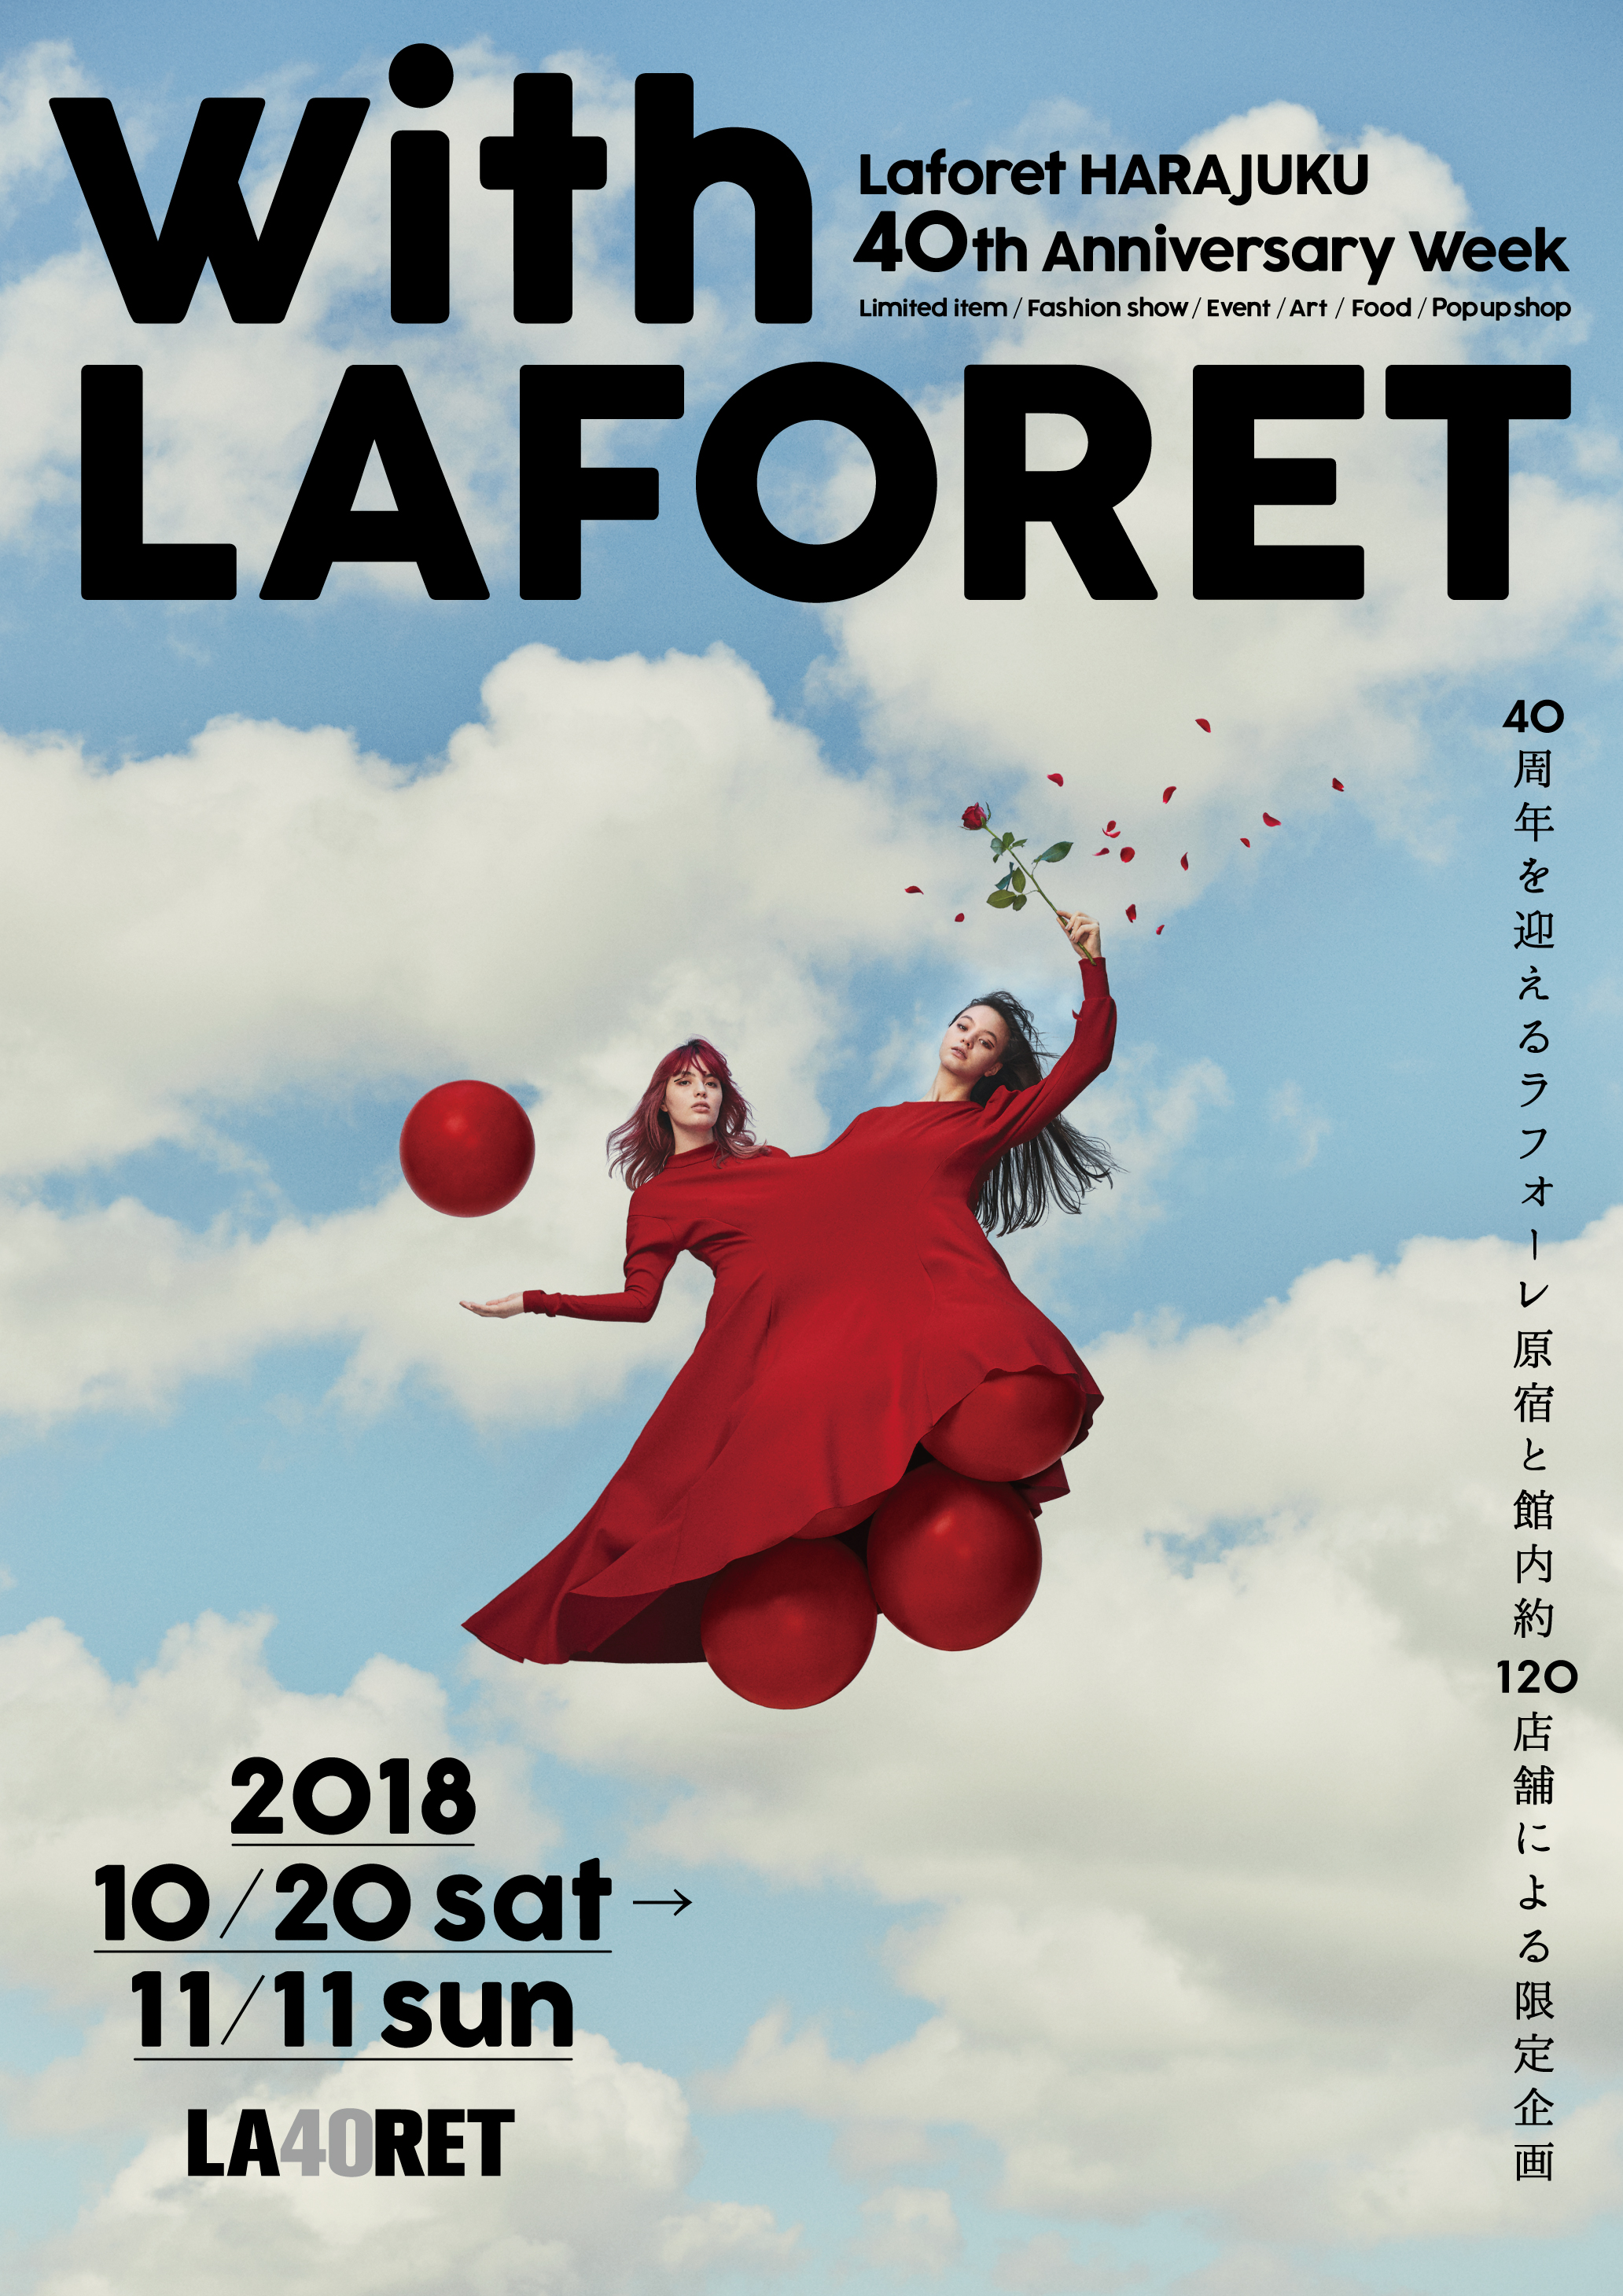 Laforet Harajuku 40th Anniversary Week With Laforet 株式会社ラフォーレ原宿のプレスリリース